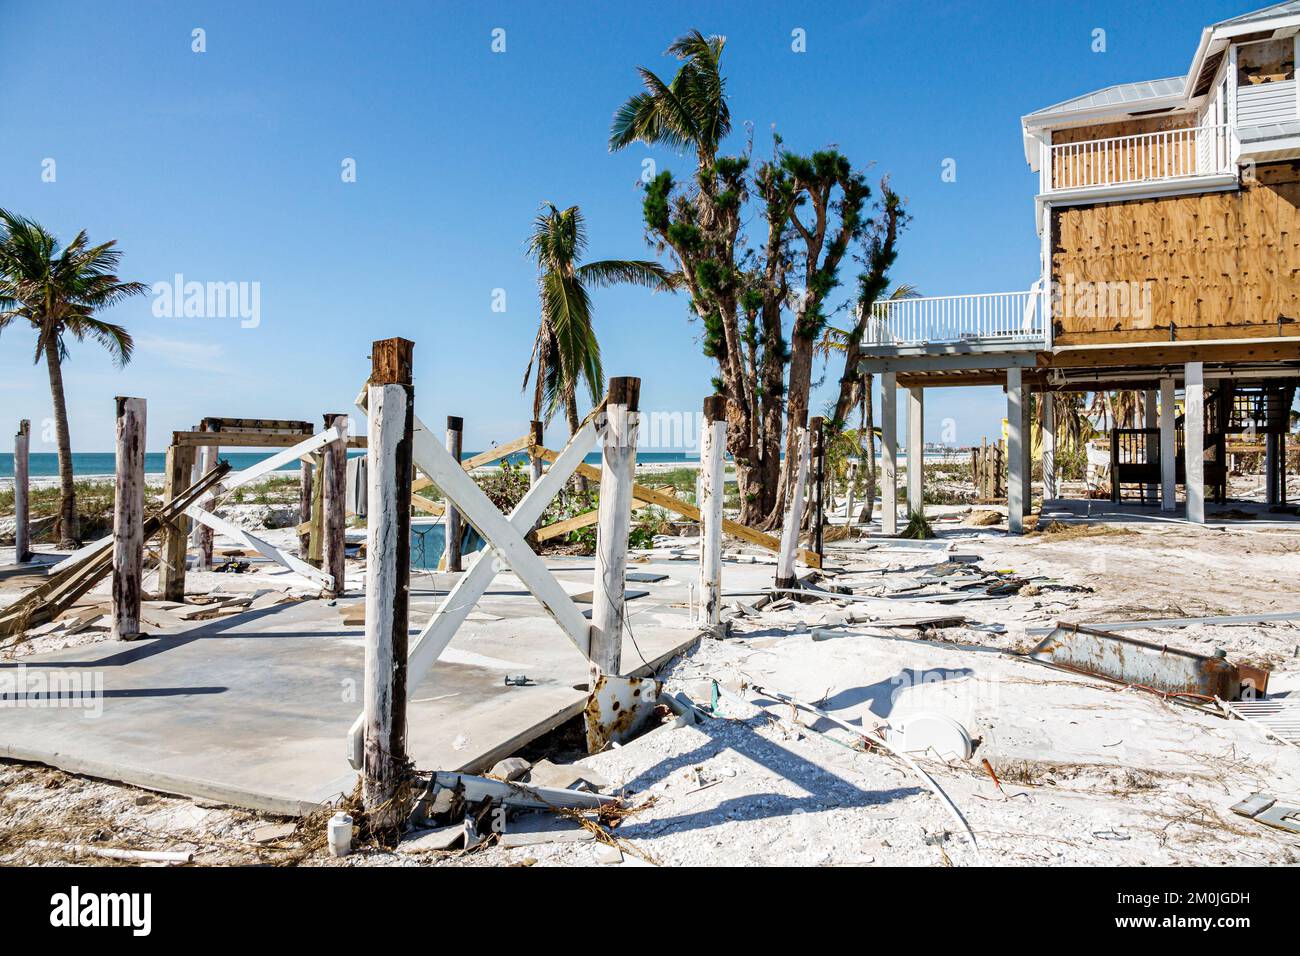 Fort Ft. Myers Beach Florida, Golf von Mexiko Estero Island Estero Boulevard, Haus Häuser Häuser Häuser Eigentum Hurrikan Ian Schaden Zerstörung beschädigt d Stockfoto